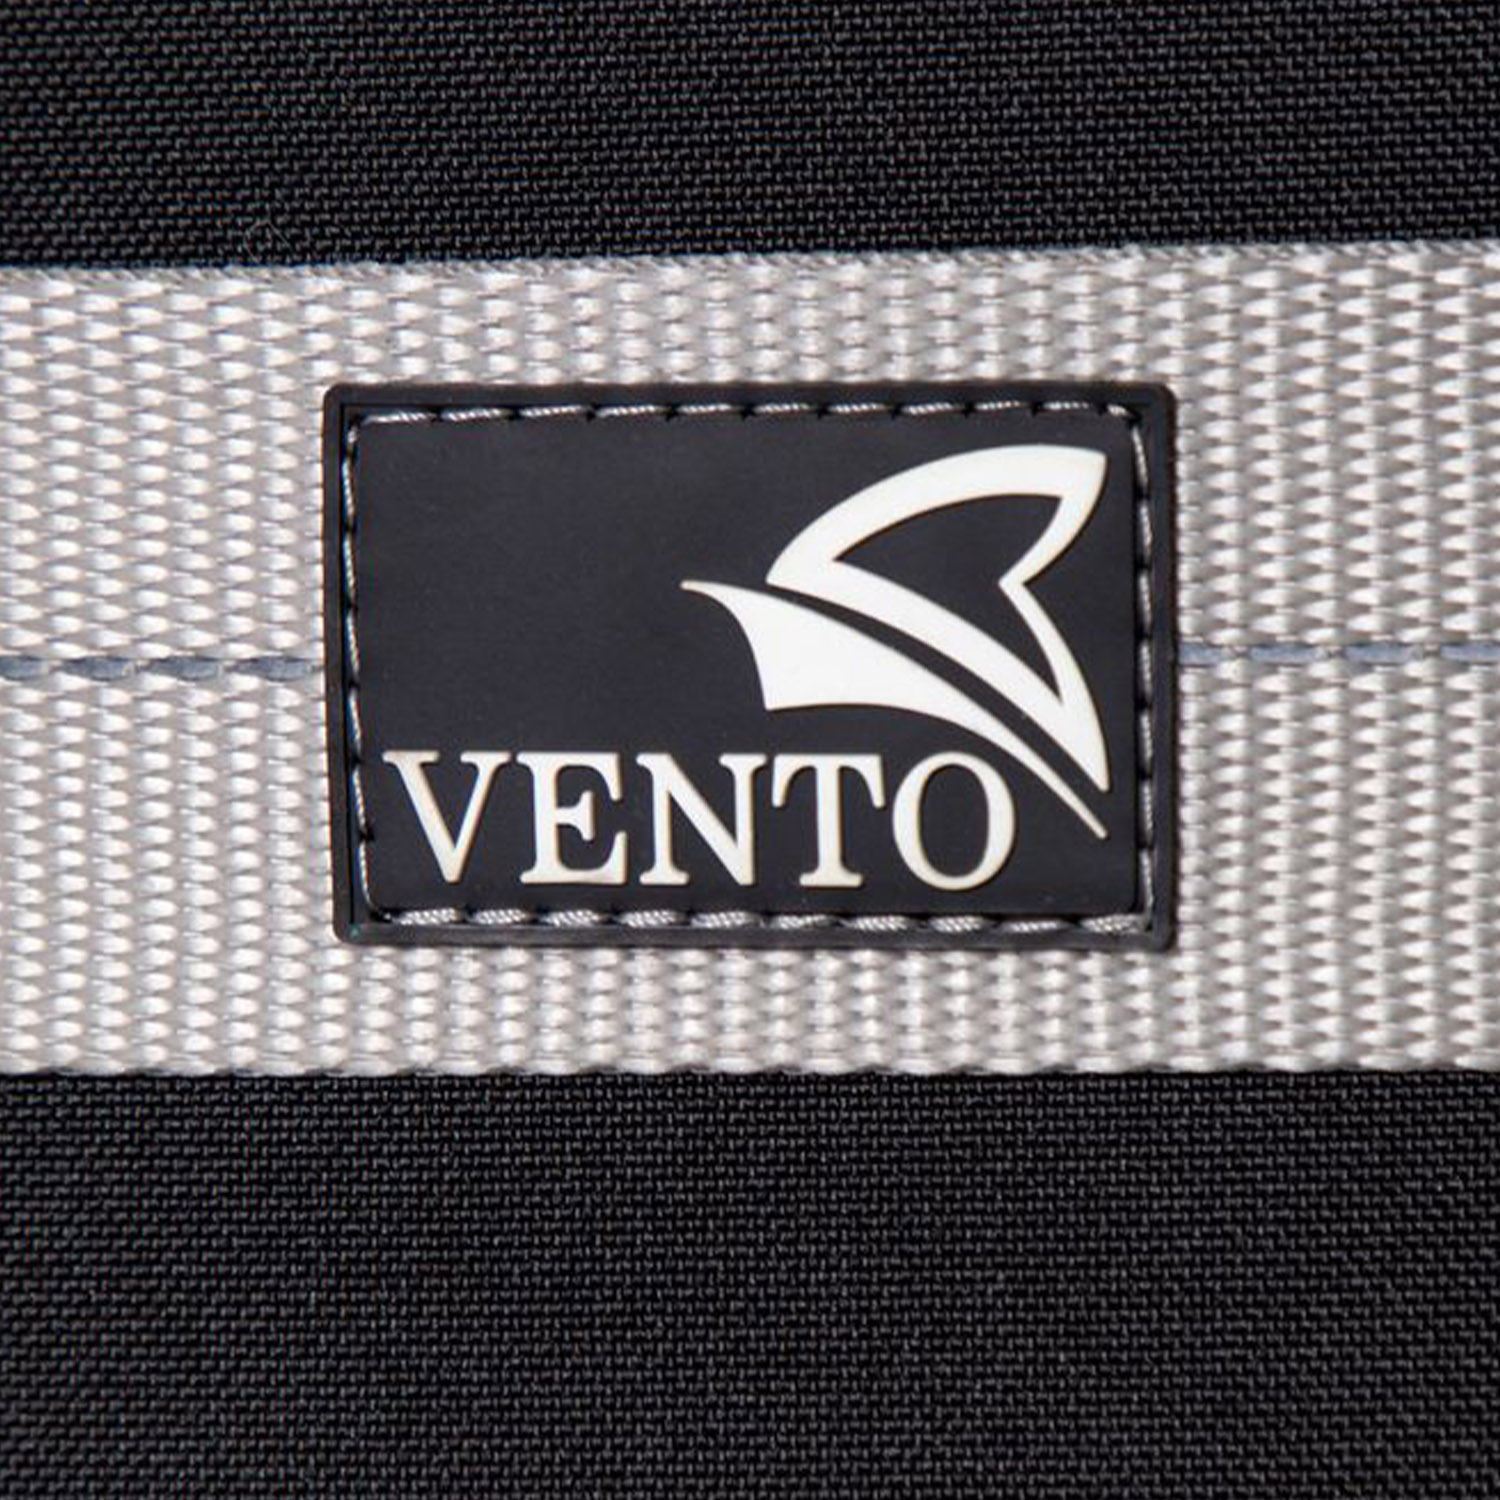 Обвязка Vento Альфа 5.0, размер 1